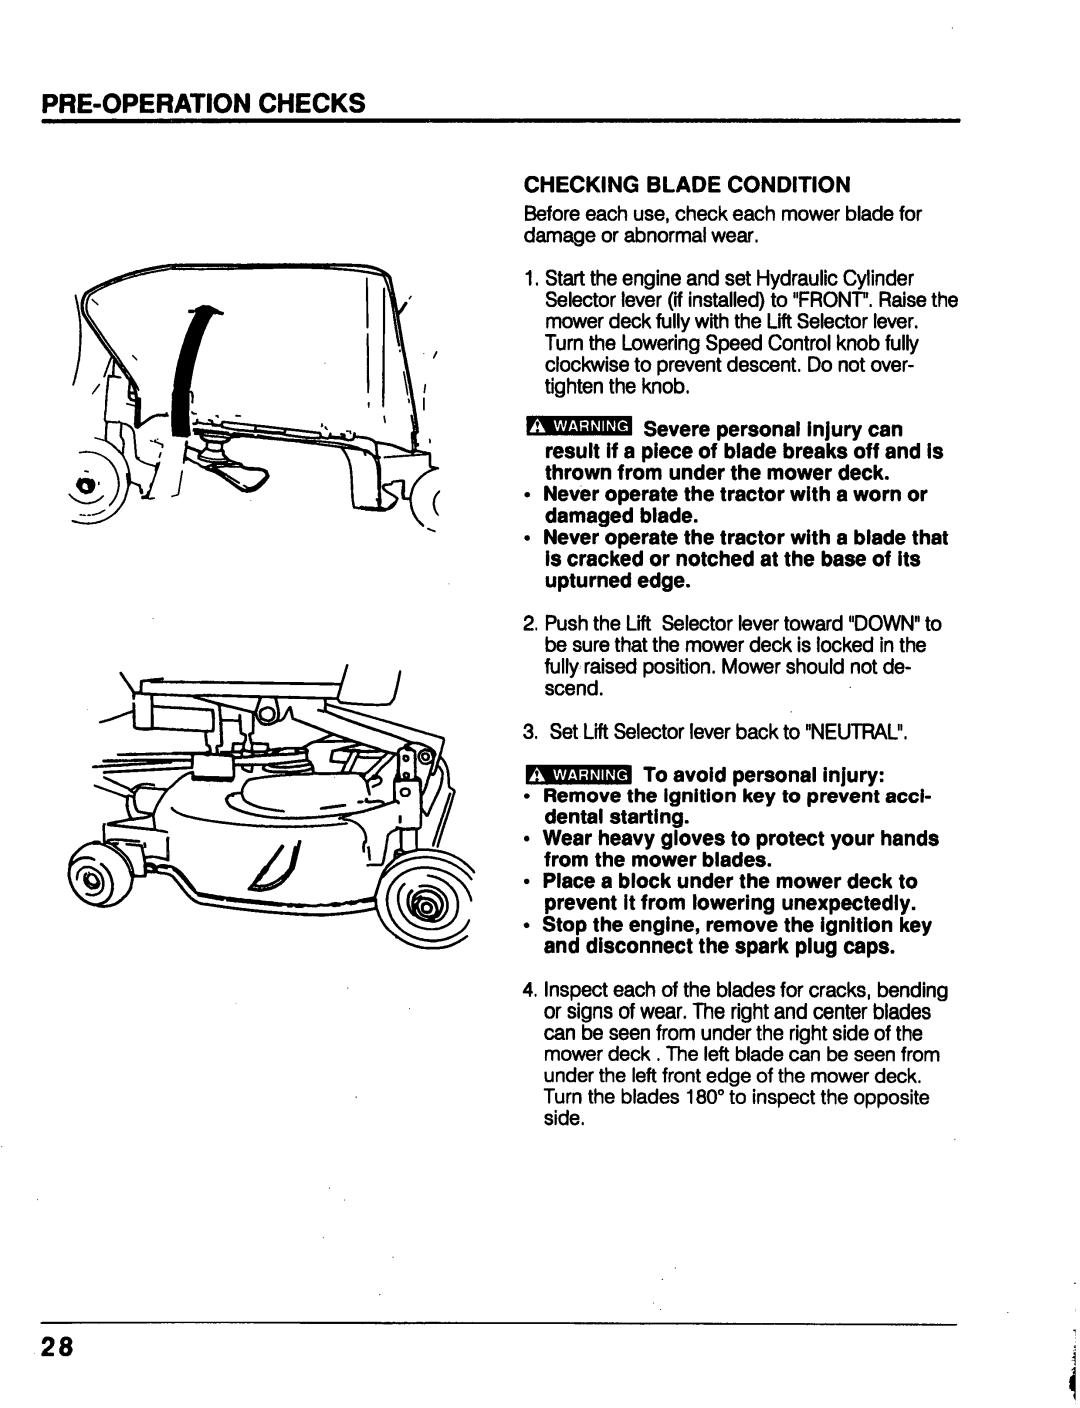 Honda Power Equipment MM52 manual Pre-Operationchecks, Checking Blade Condition, a mTo avoid personal injury 